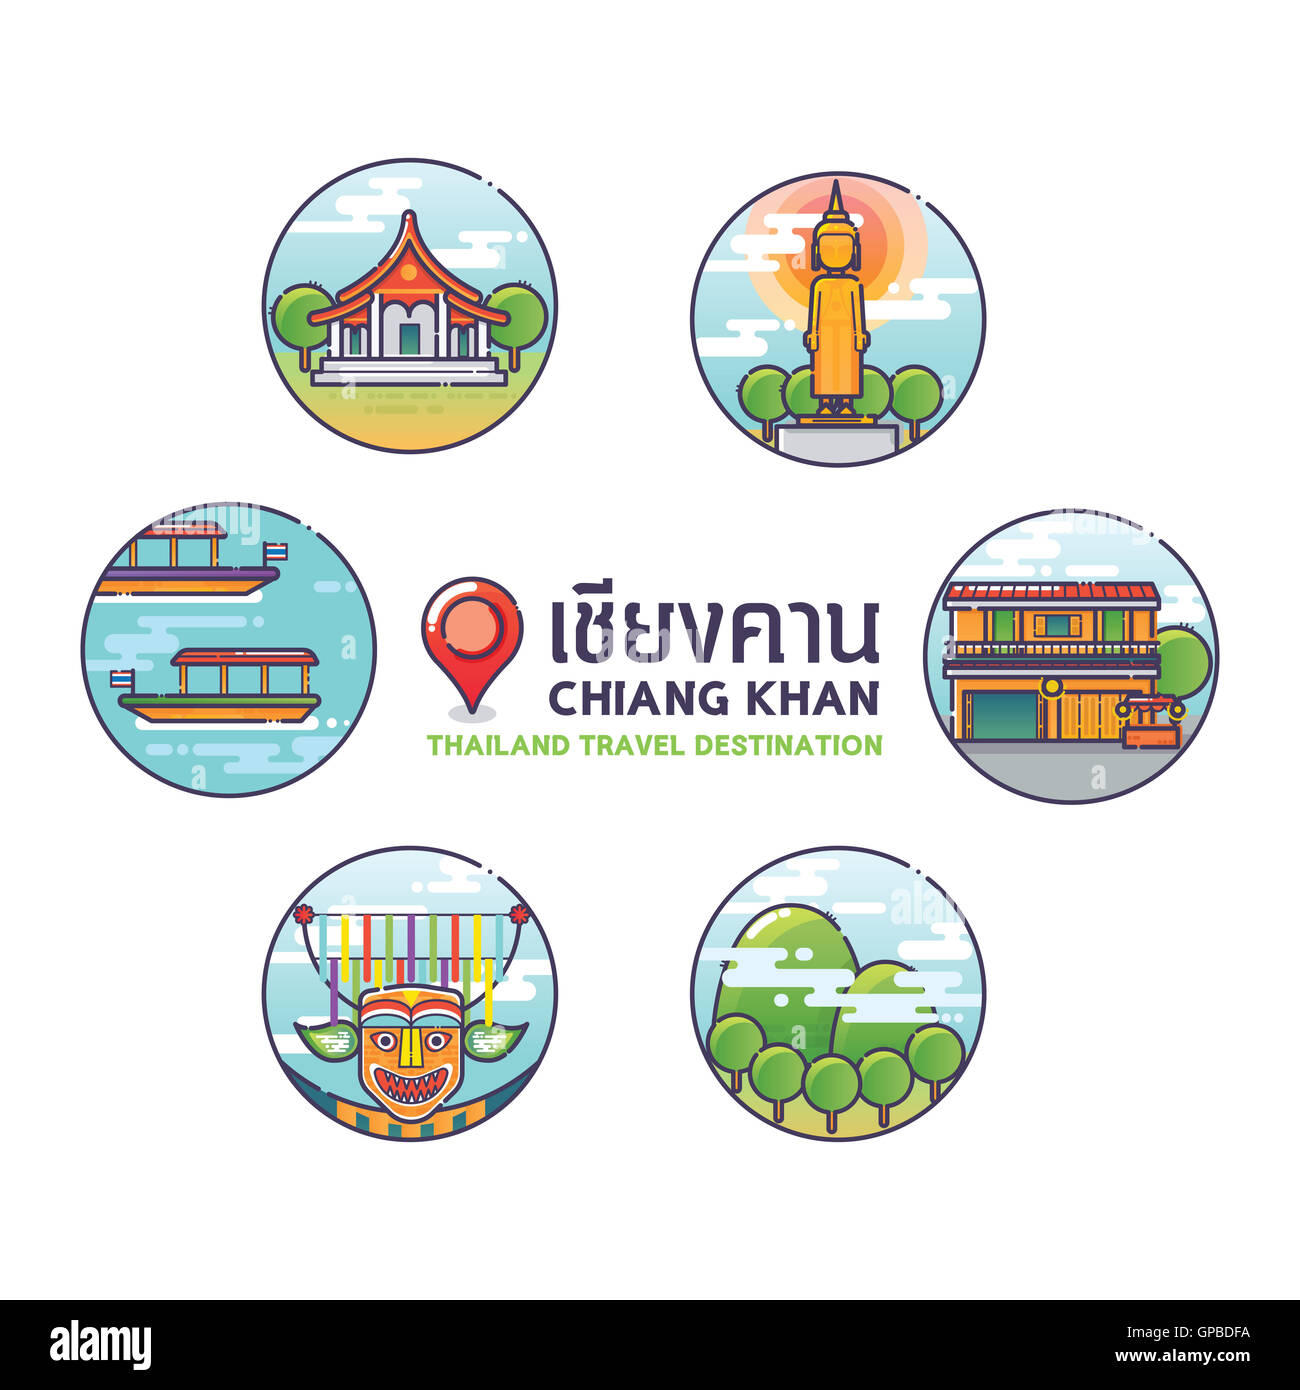 Vektor-Illustration der Chiang Khan bunte Icons, Thailand Travel Destination Concept.Trendy linearen Stil. Stockfoto